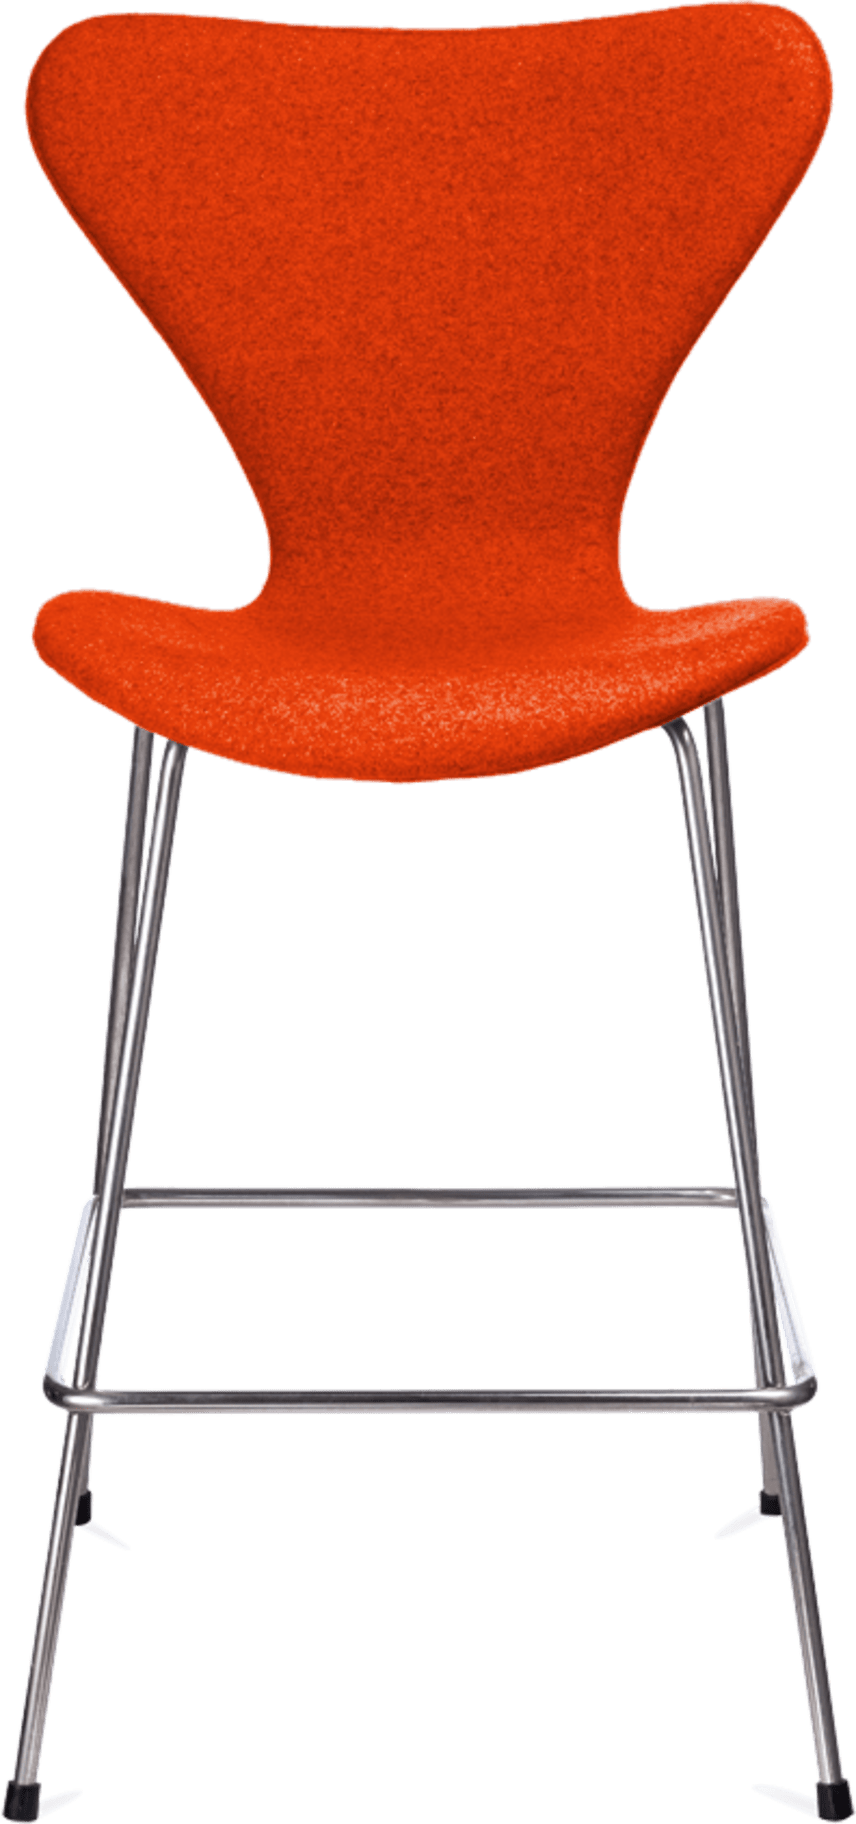 Series 7 Barstool Upholstered Orange image.